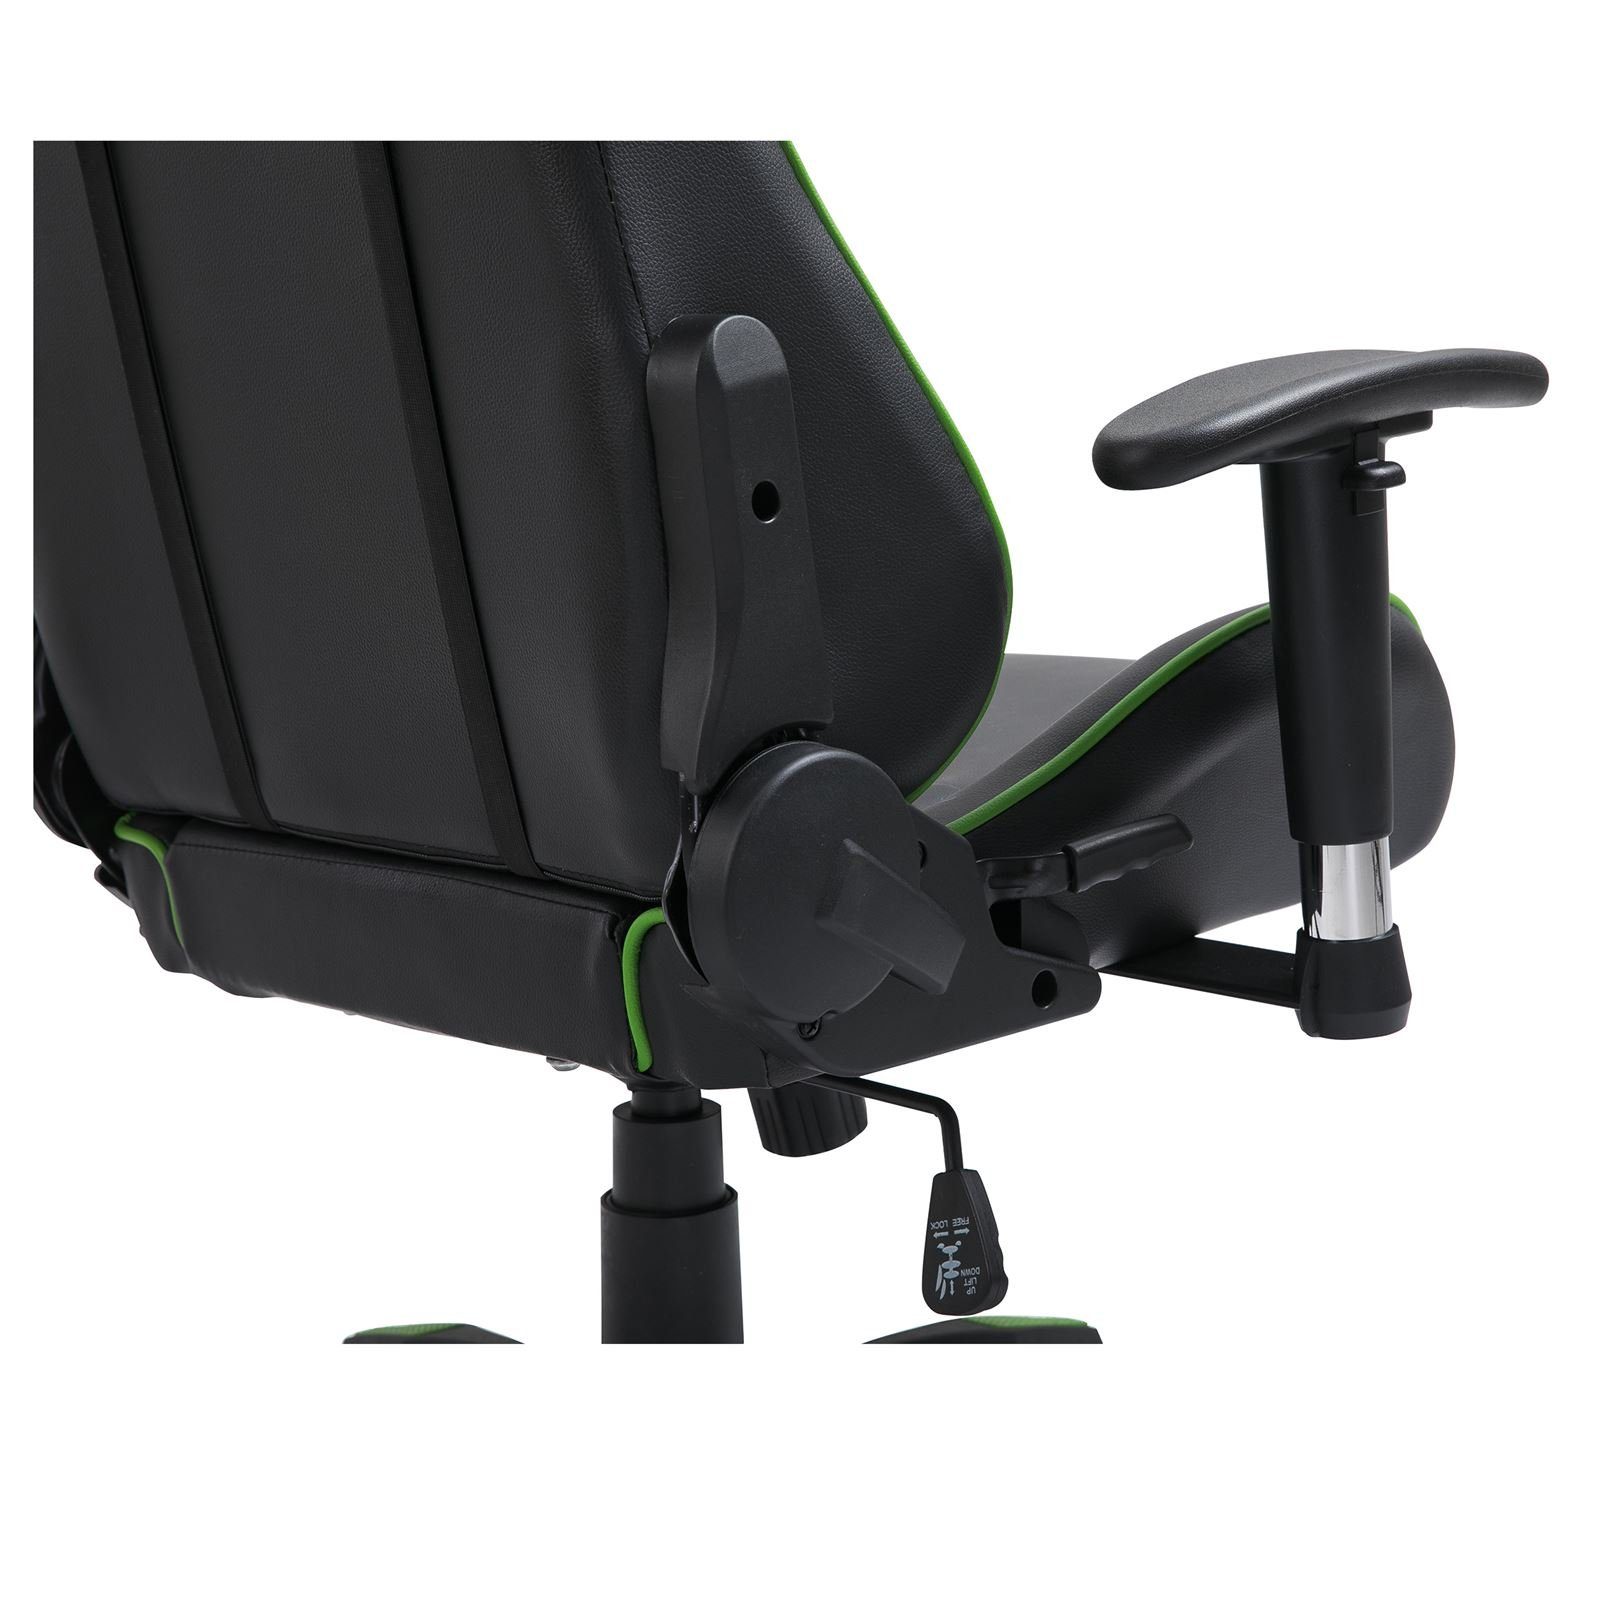 schwarz/grün Racer Chefsessel CARO-Möbel Gaming GAMING Chair Bürostuhl Schreibtischstuhl GAMING, Drehstuhl